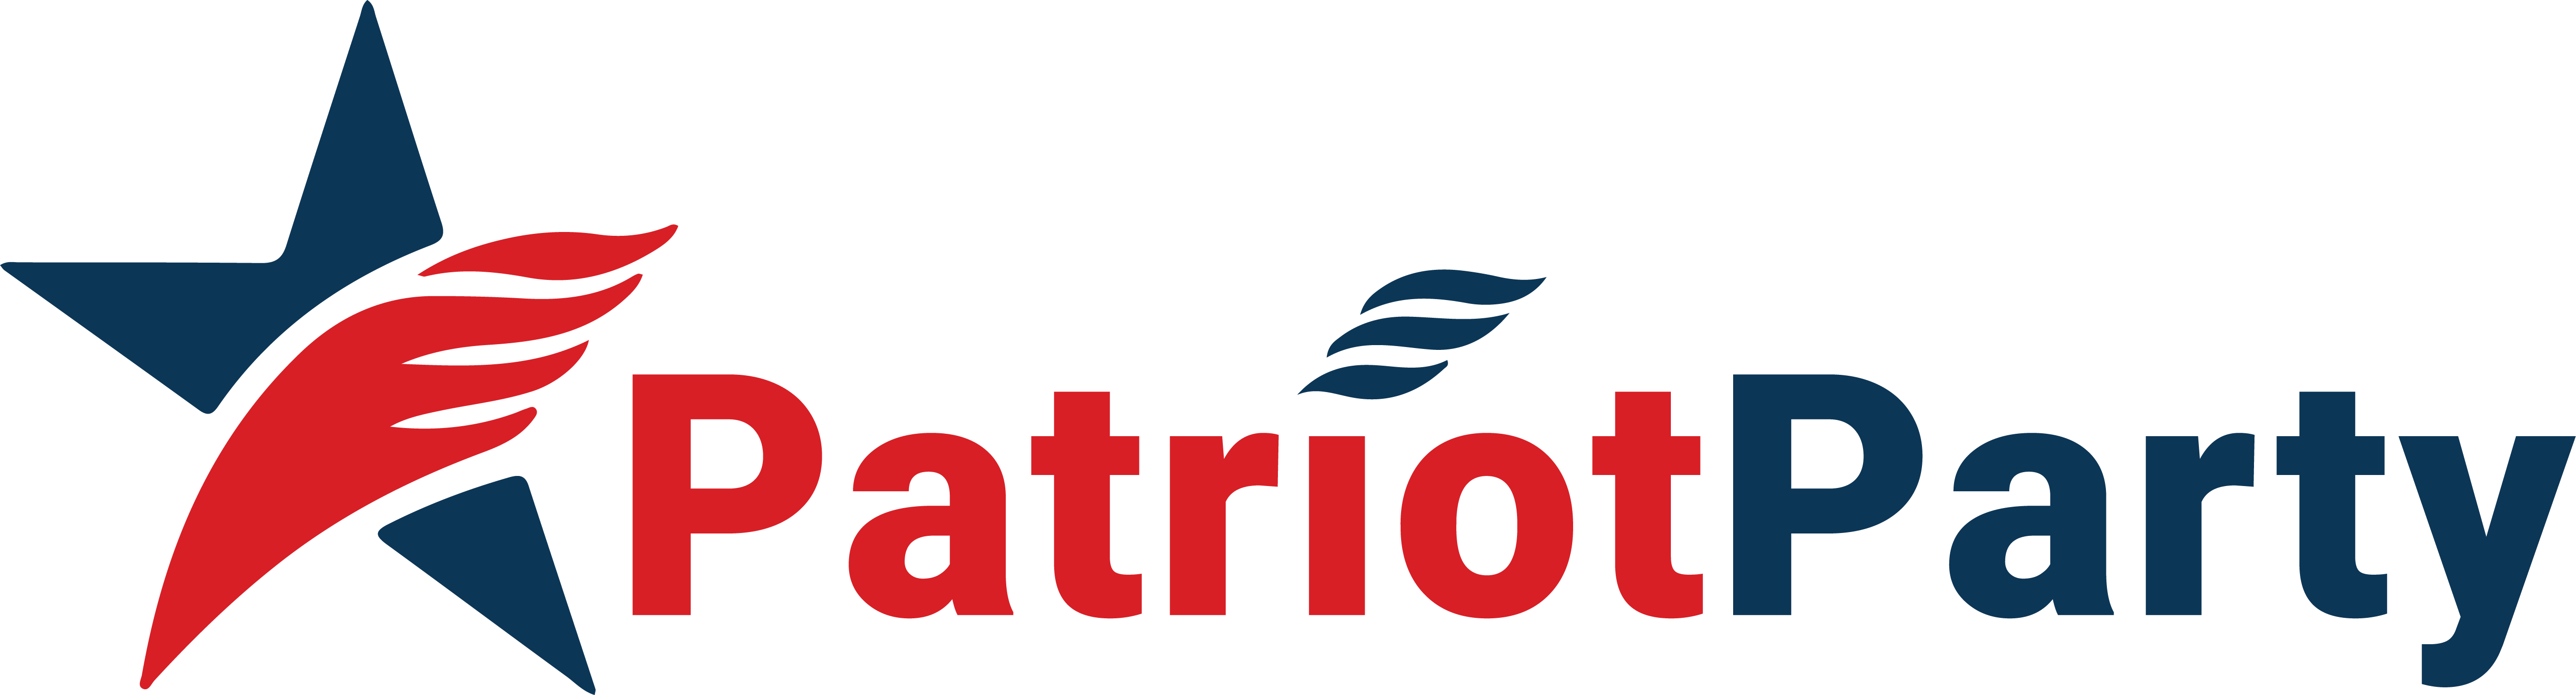 Patriot Party News